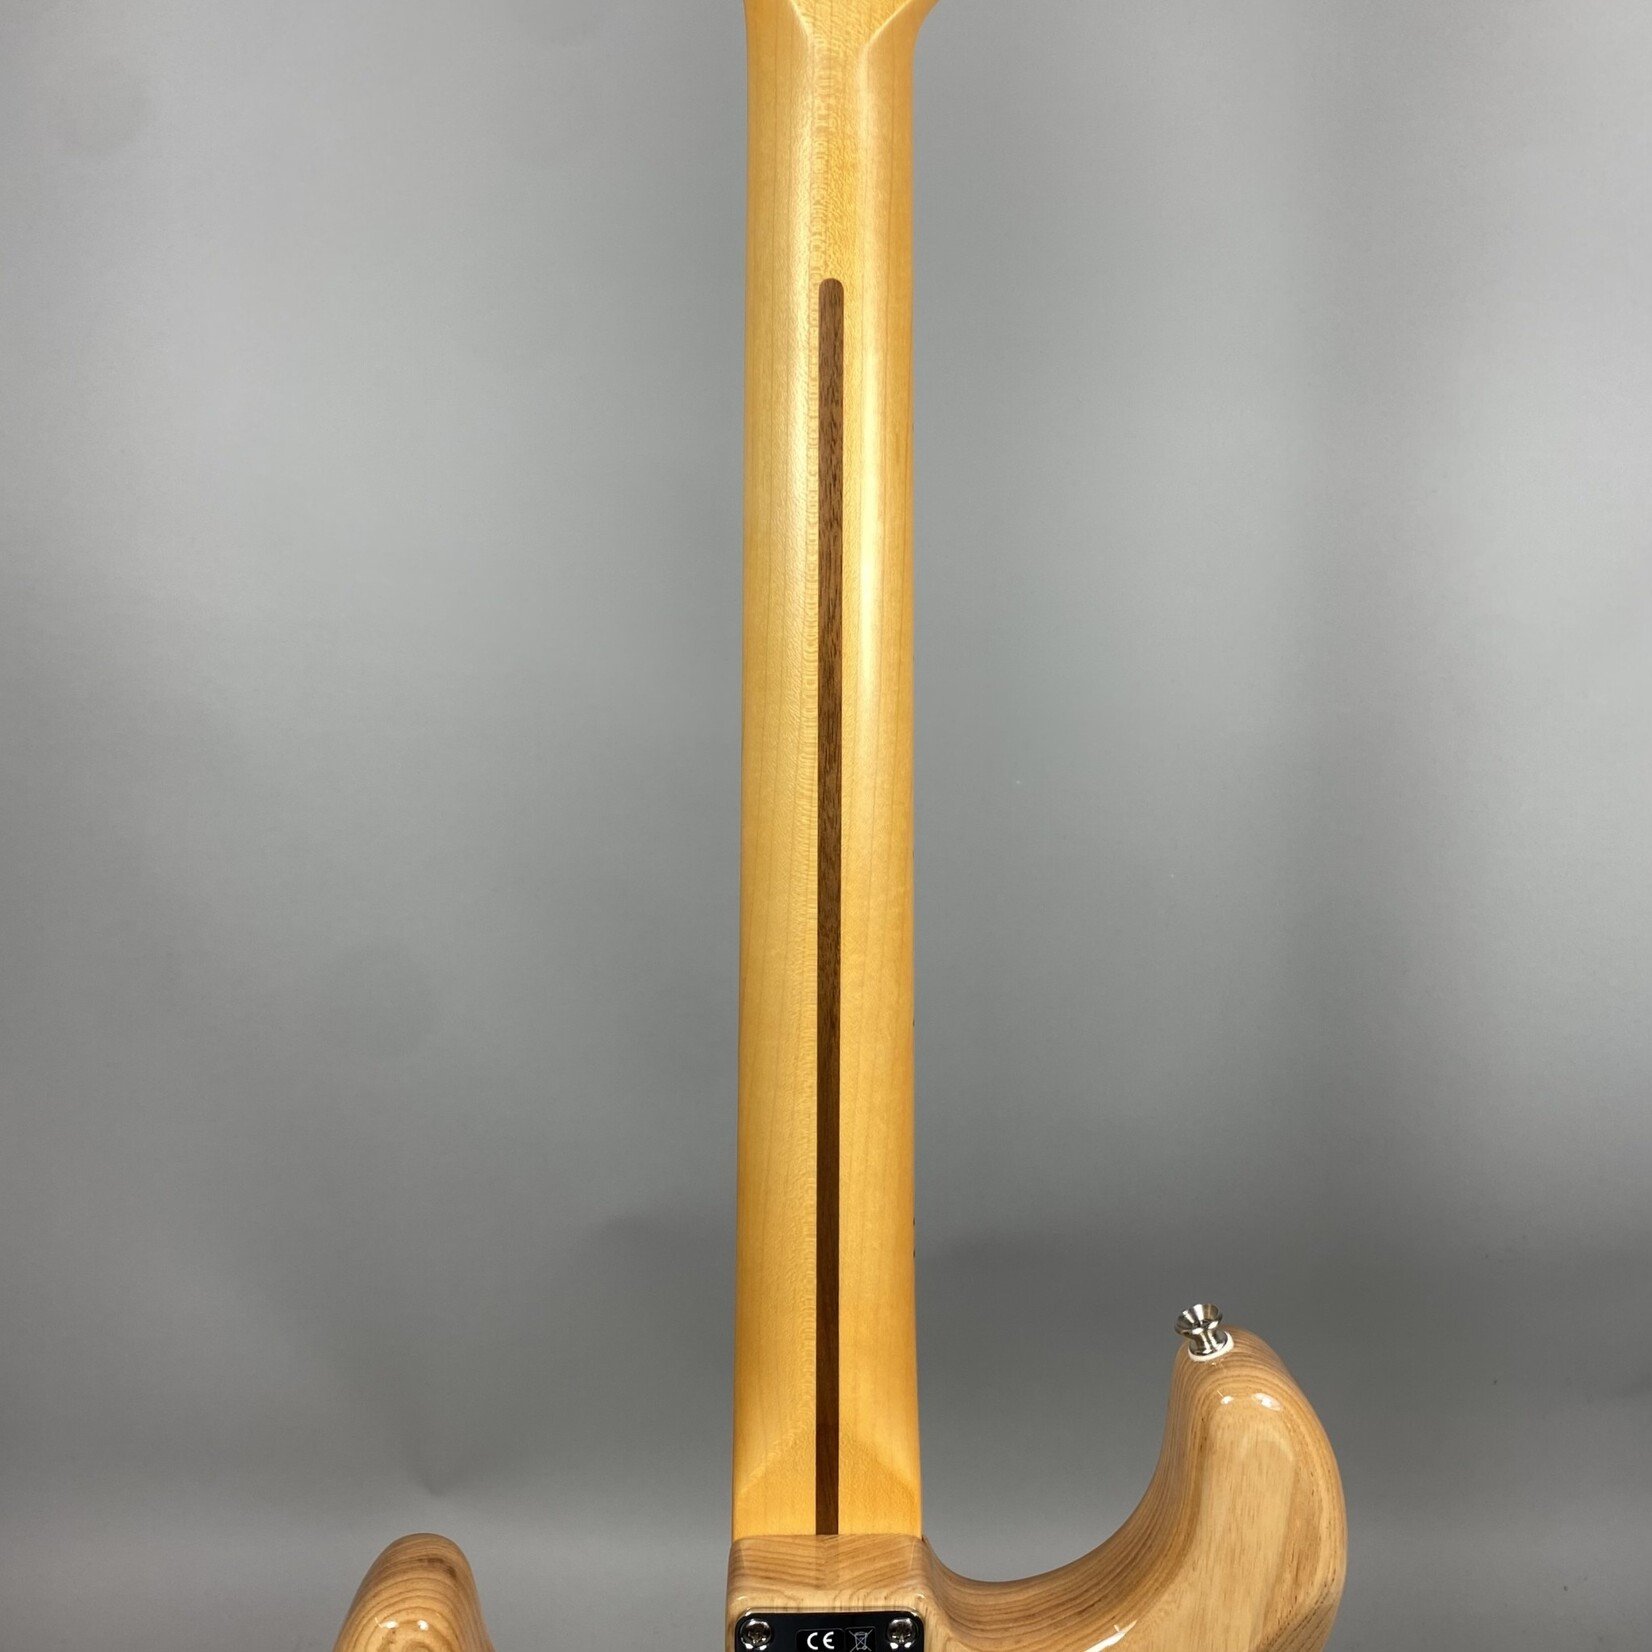 Fender 2019 Fender Rarities Series Flame Koa Top American Original '50s Stratocaster